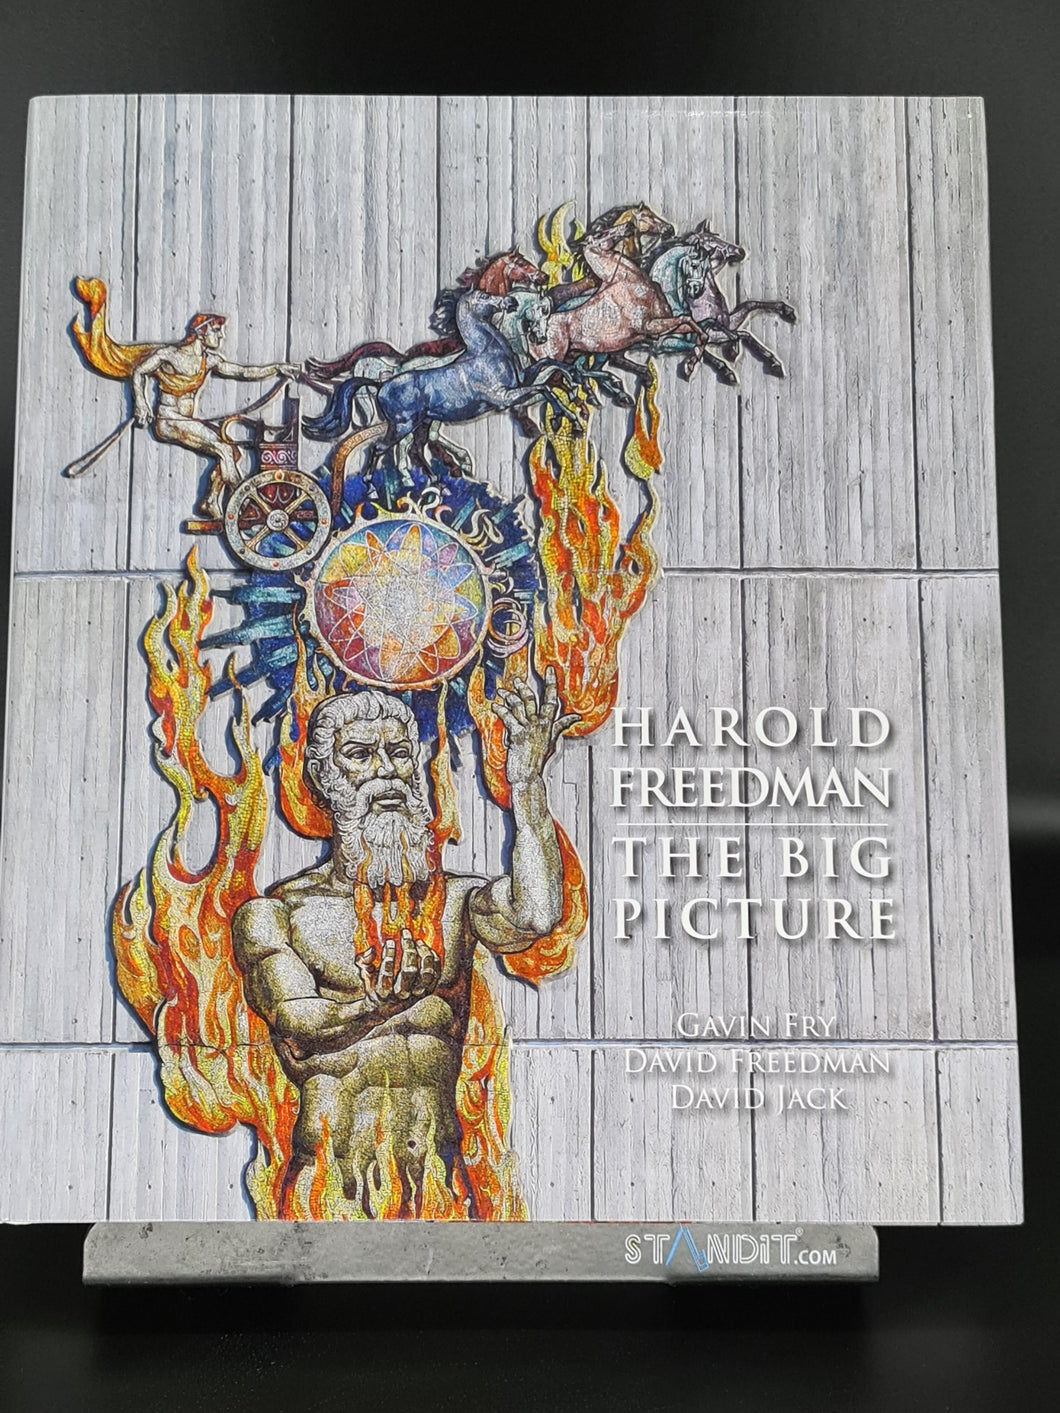 HAROLD FREEDMAN - THE BIG PICTURE